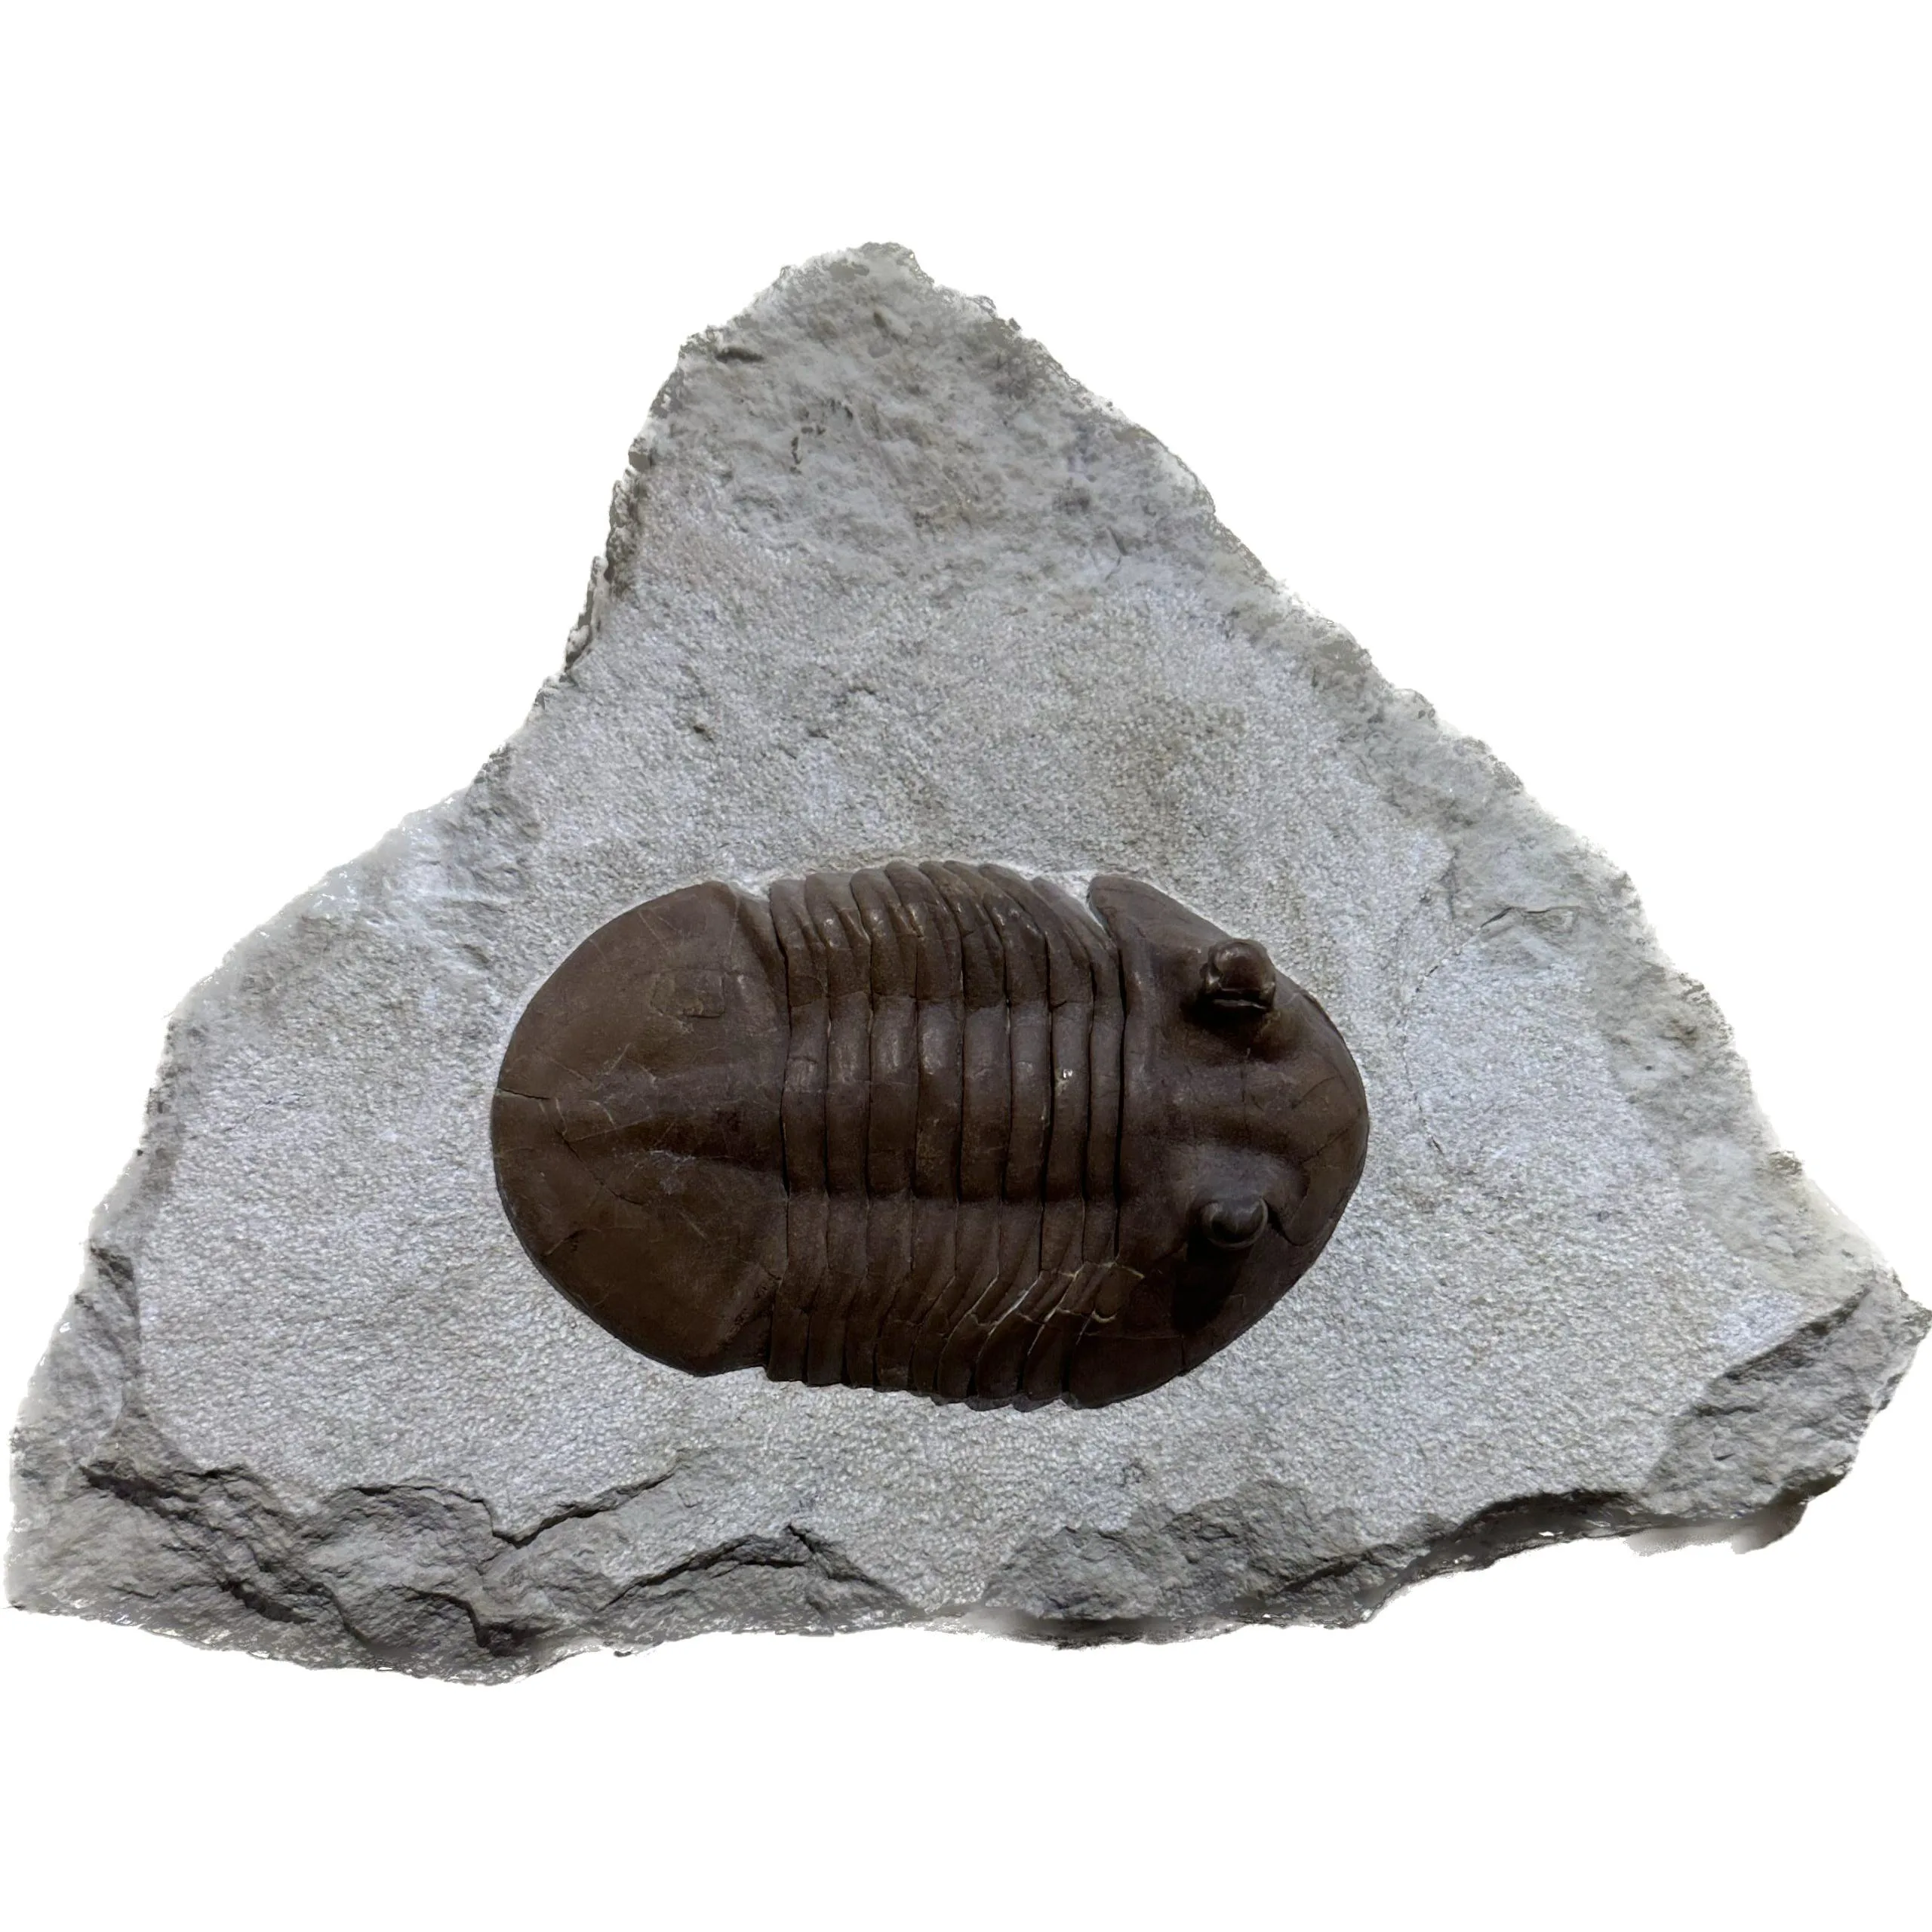 Asaphus from Russia, Trilobite Prehistoric Online